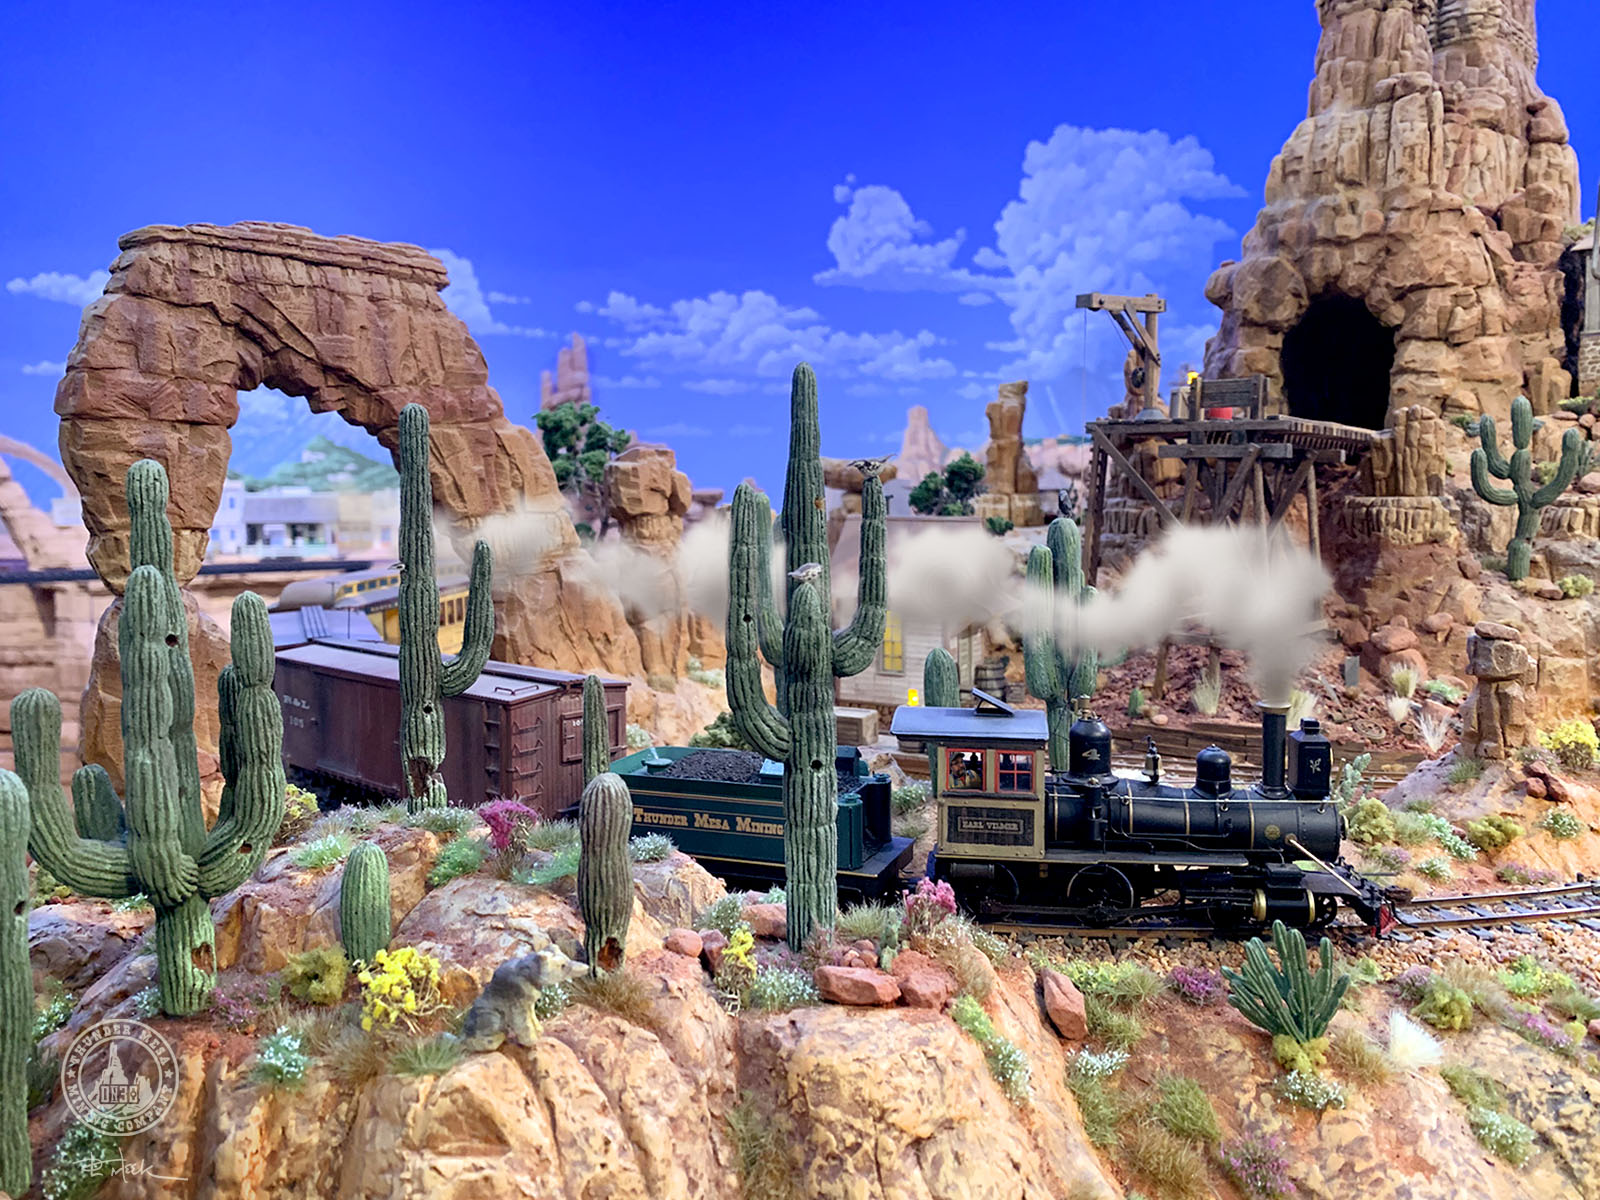 Thunder Mesa model railroad